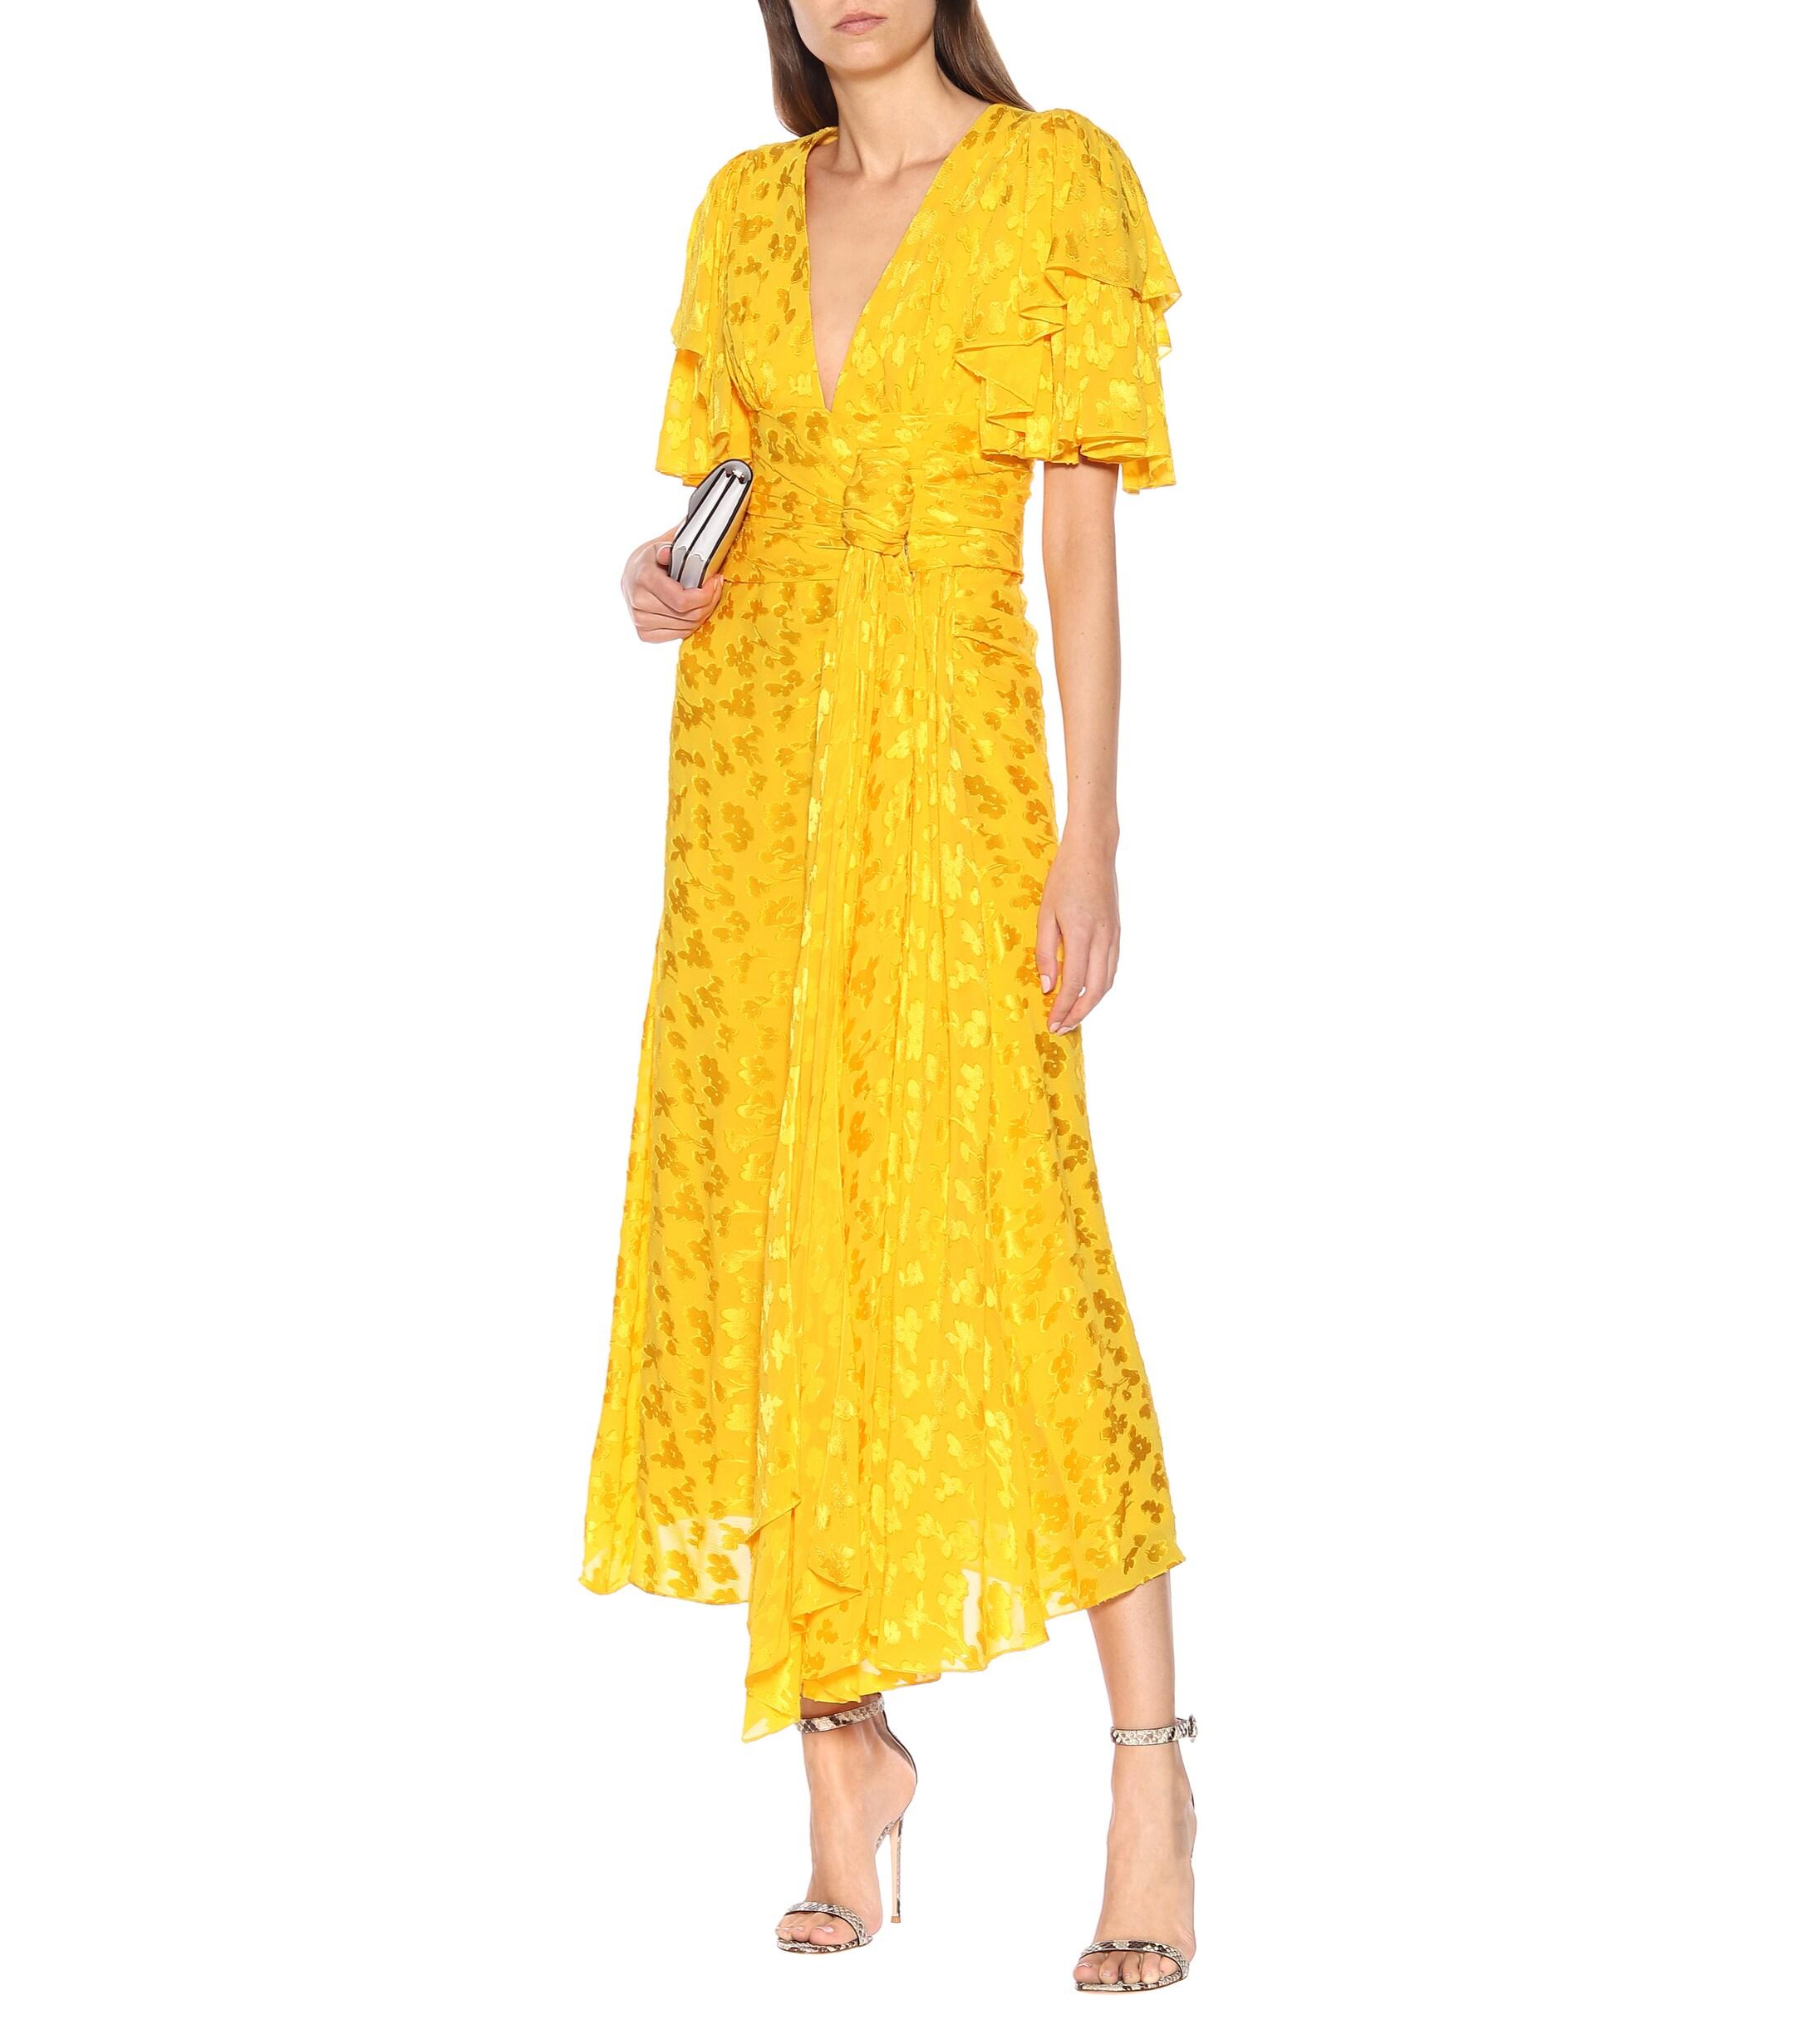 Carolina Herrera Asymmetric Jacquard Midi Dress in Yellow - Lyst